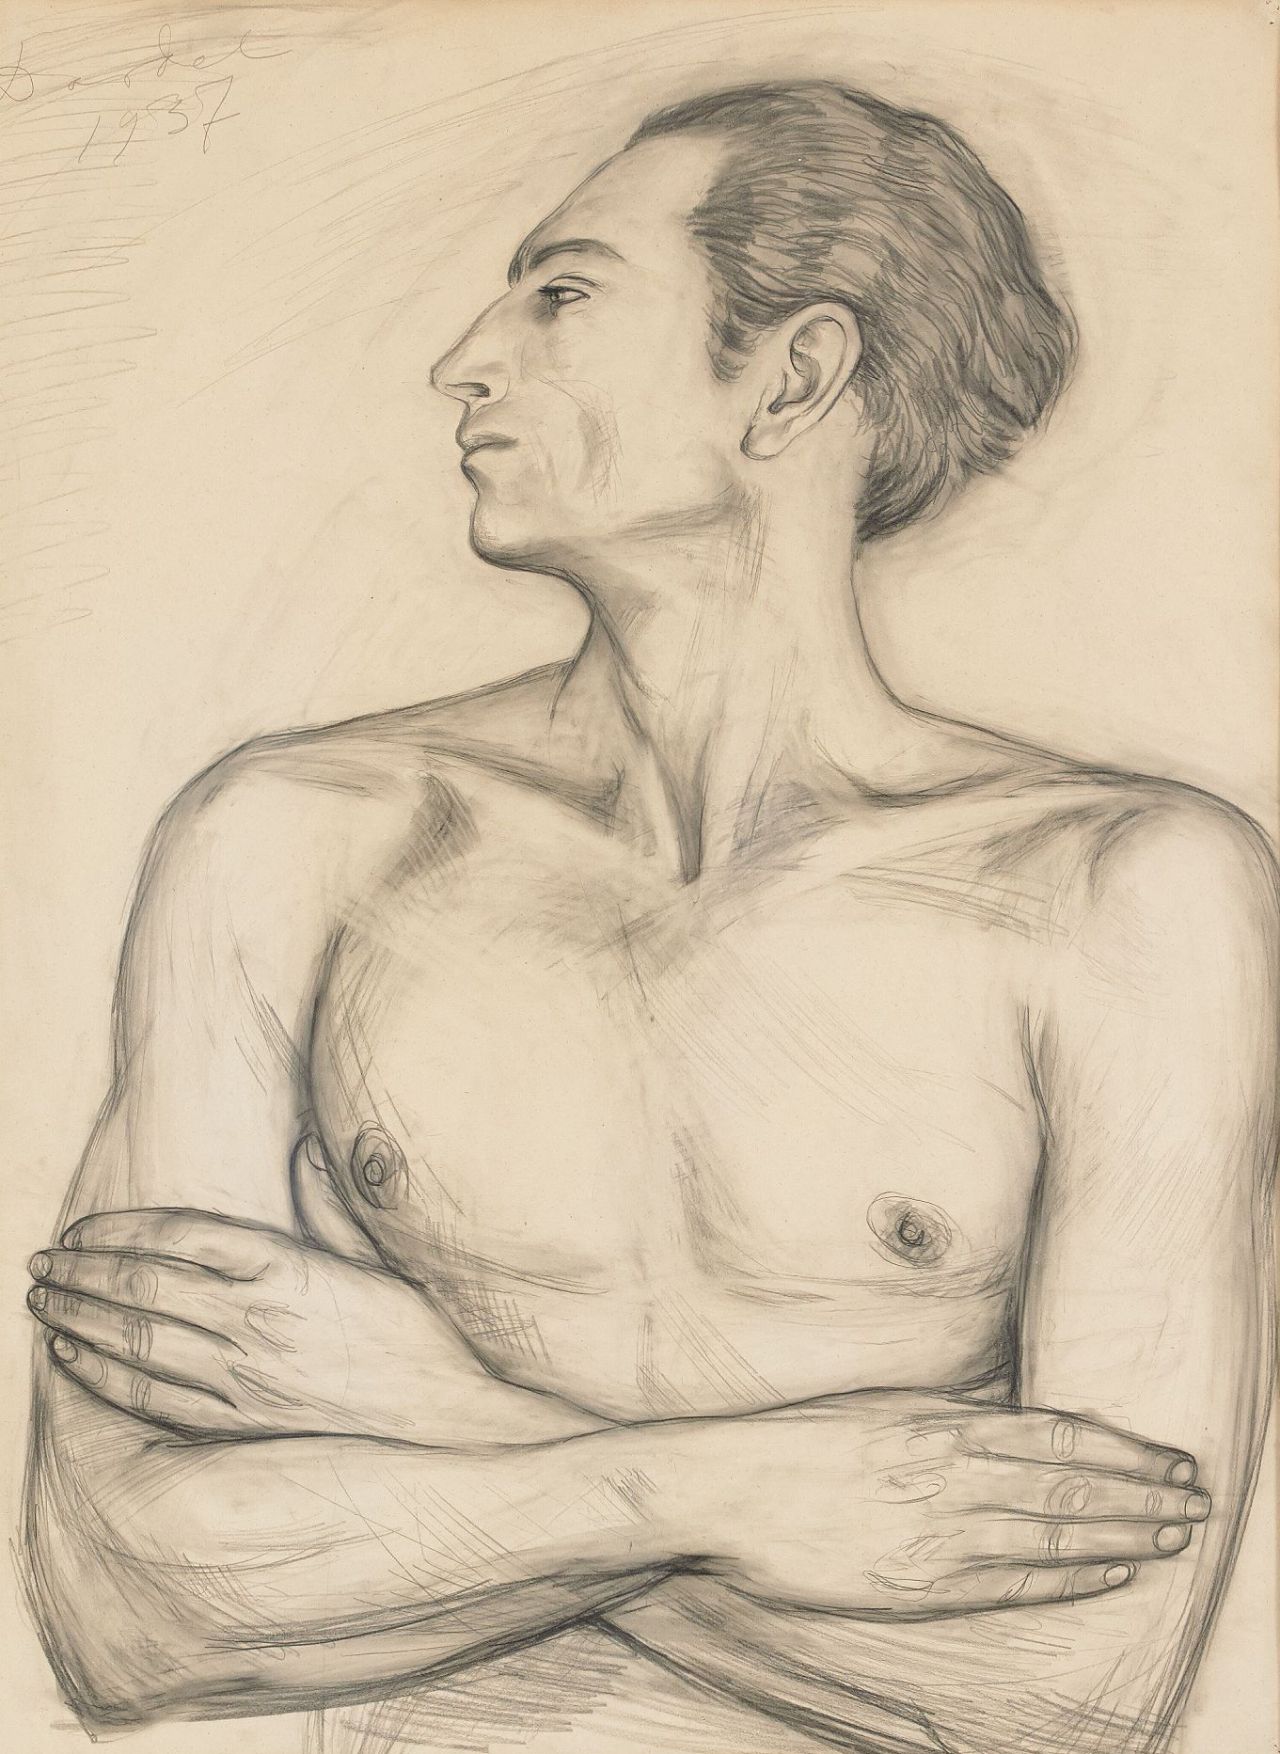 Nils Dardel (Swedish, 1888-1943), Sicilianaren [Sicilian], 1937. Pencil on paper,